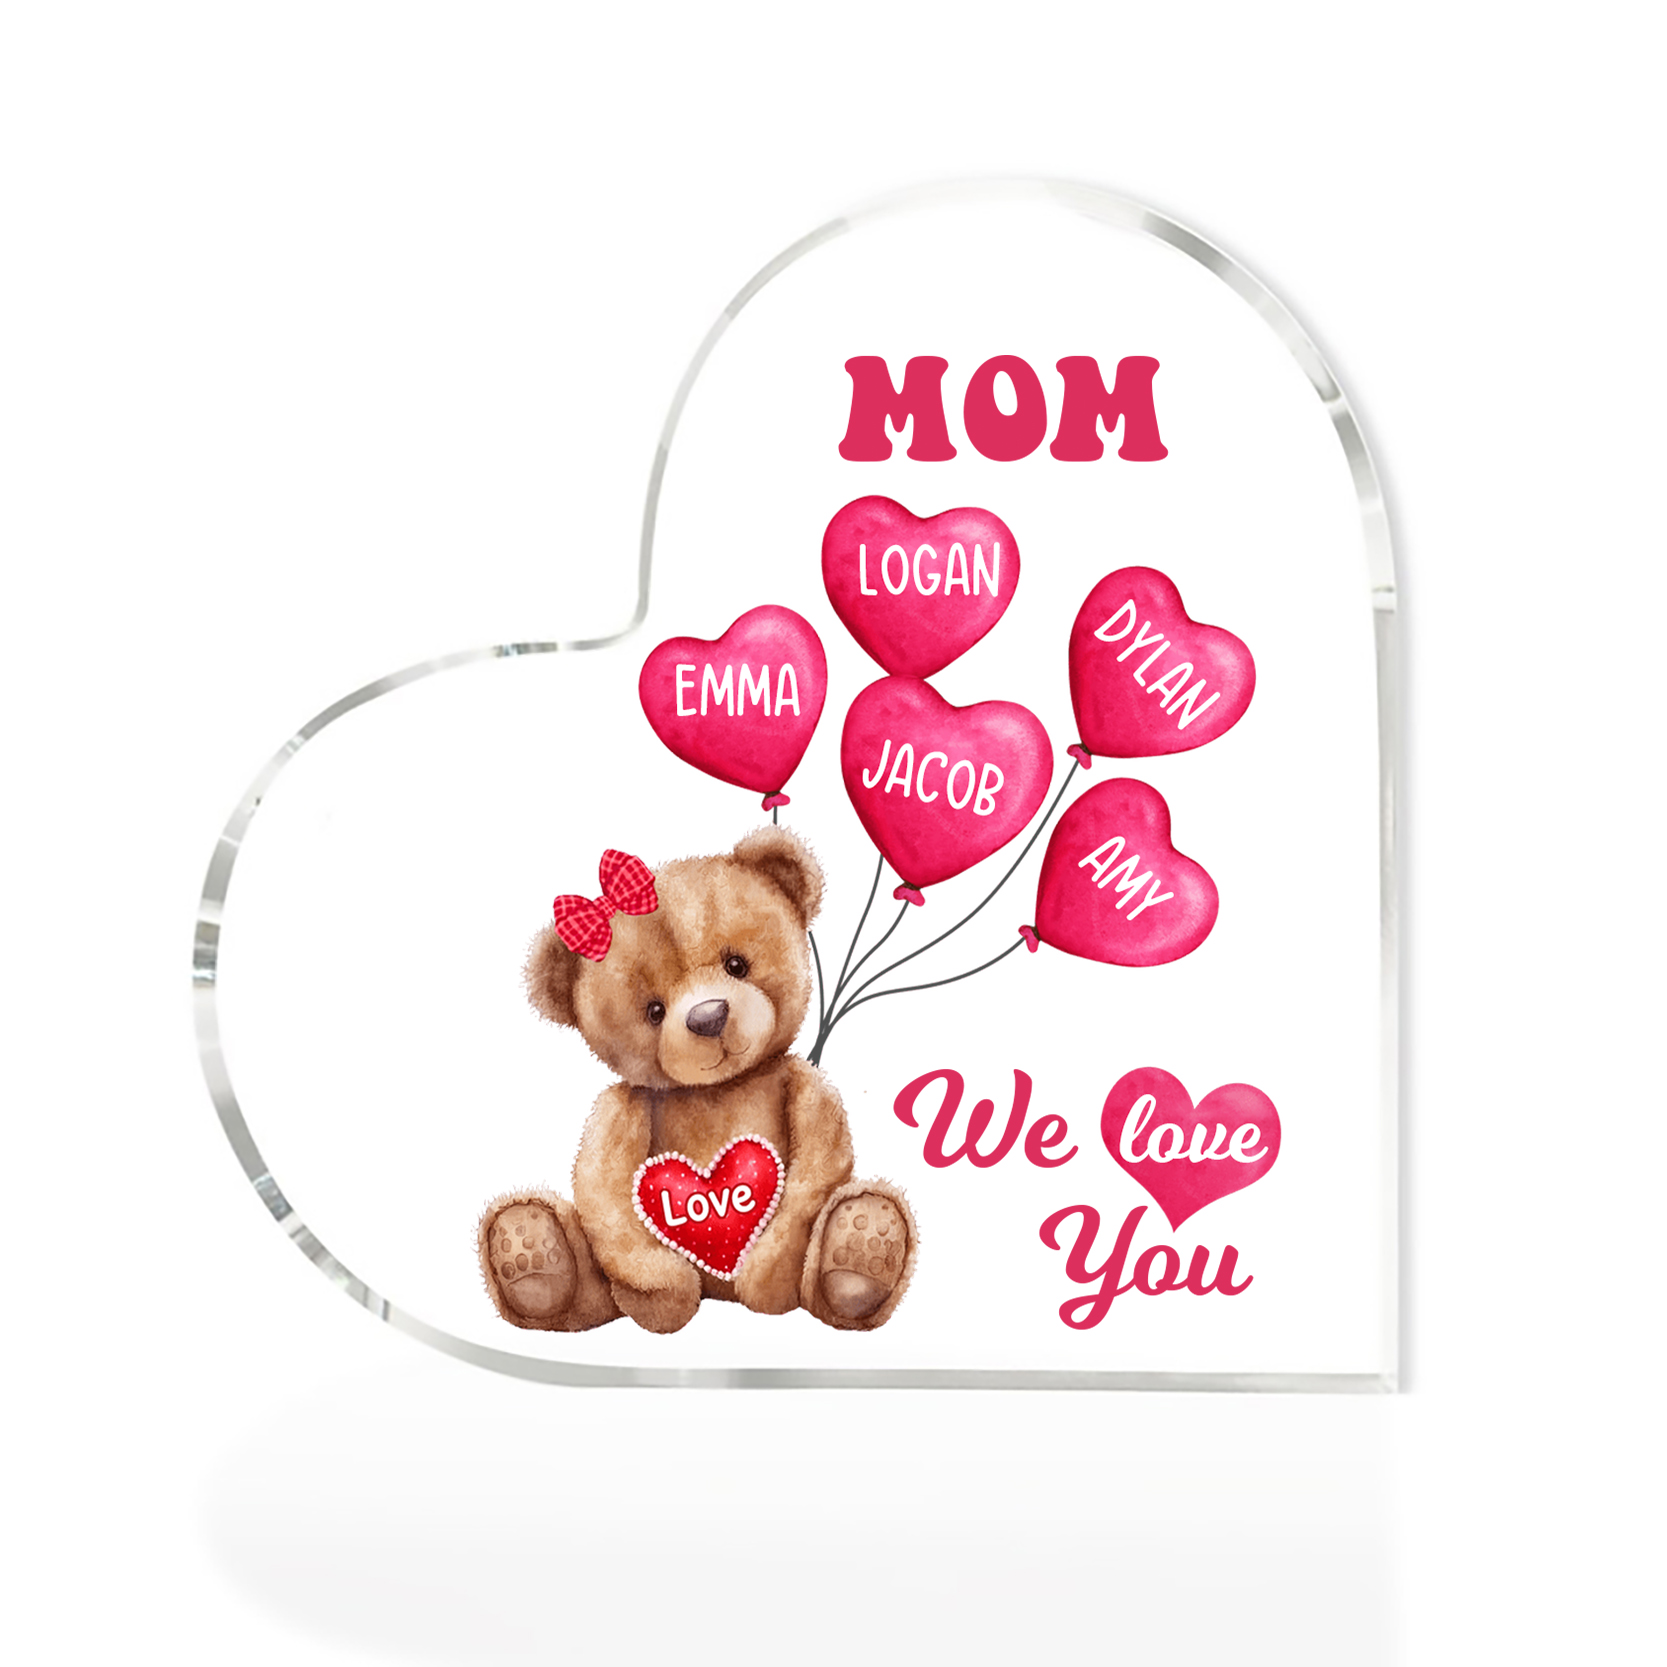 5 Names-Personalized Bear Acrylic Heart Keepsake Custom Text Acrylic Plaque Ornaments Gifts for Mom